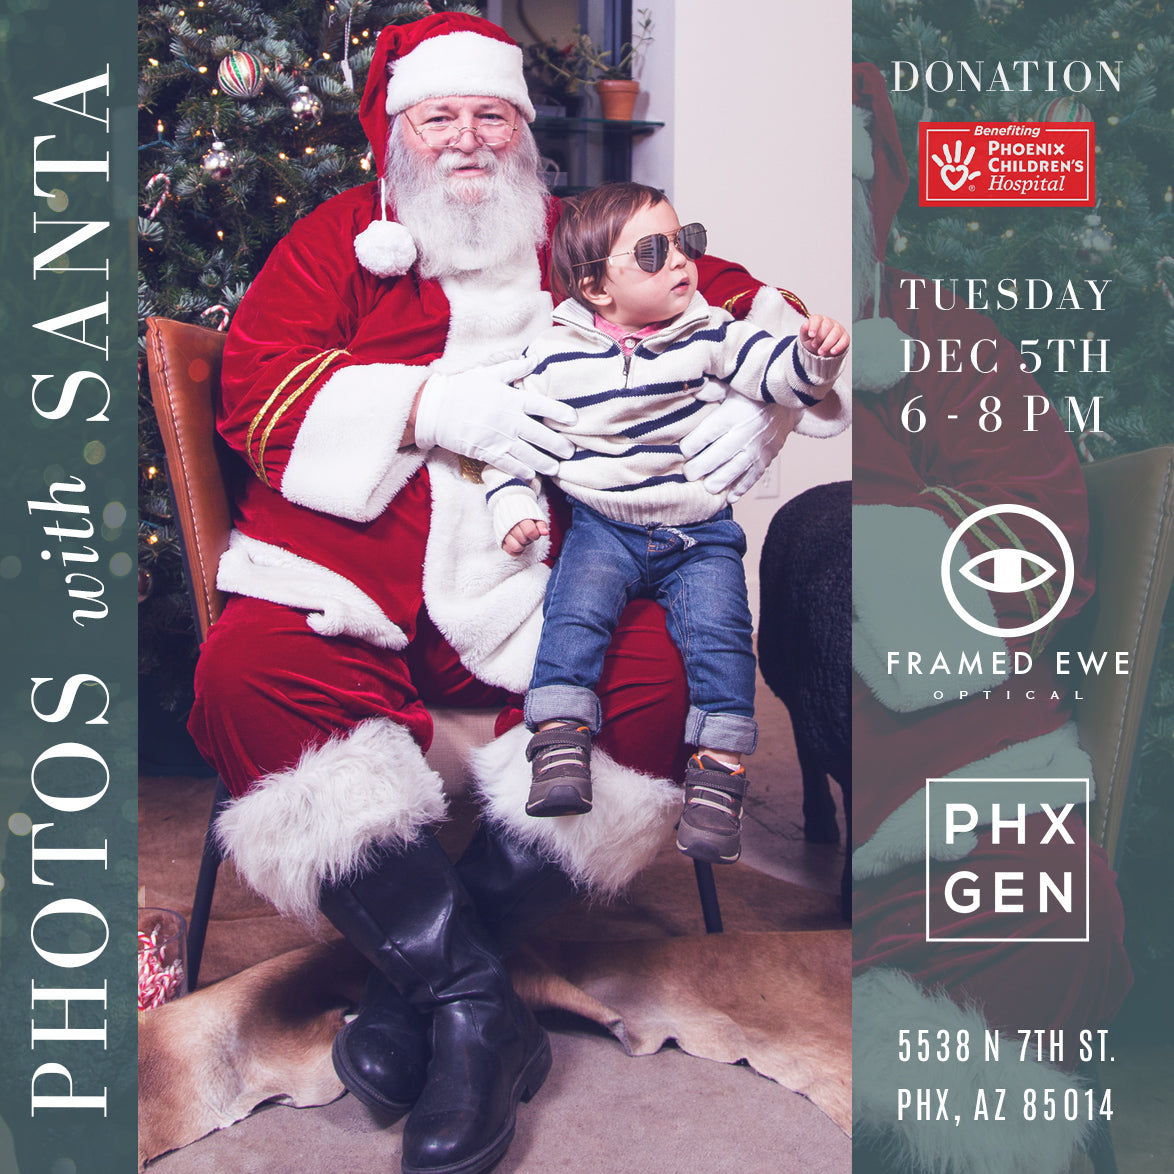 HO HO HO! Photos with Santa at Framed Ewe and Phoenix General